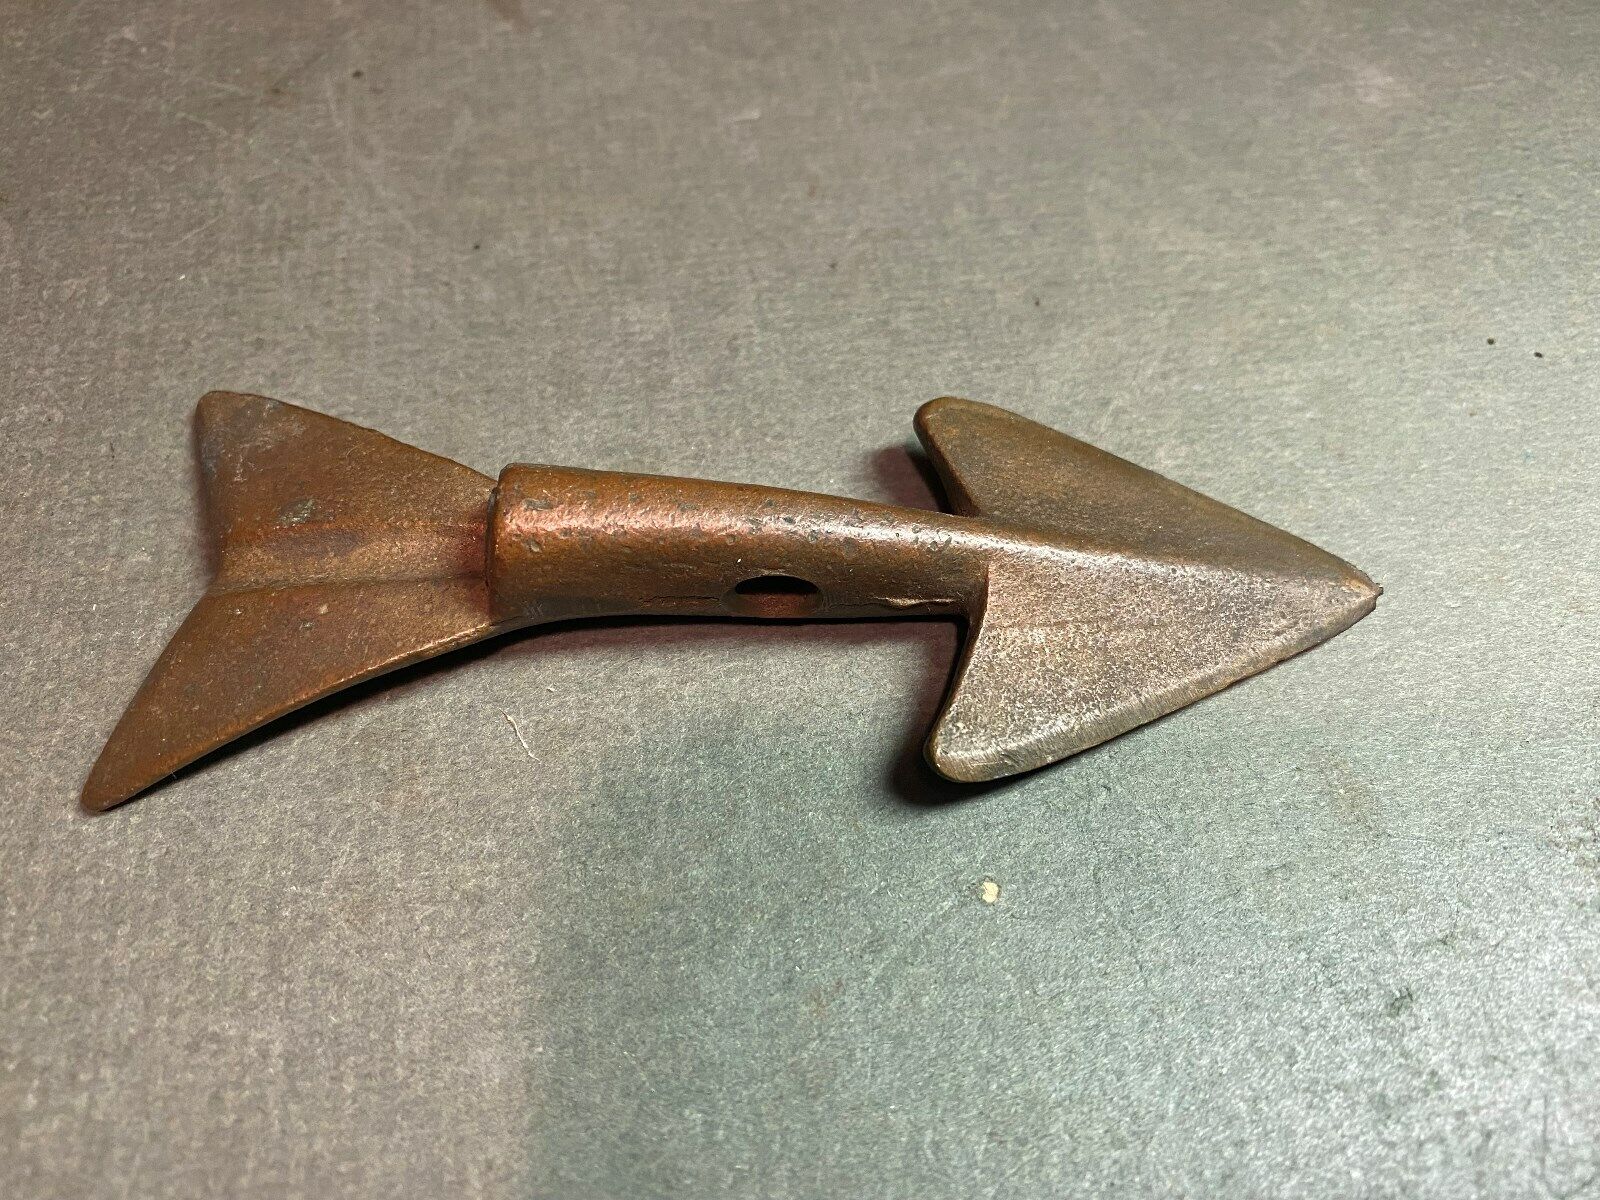 Nice brass or bronze vintage harpoon spear tip or fishing lance tip